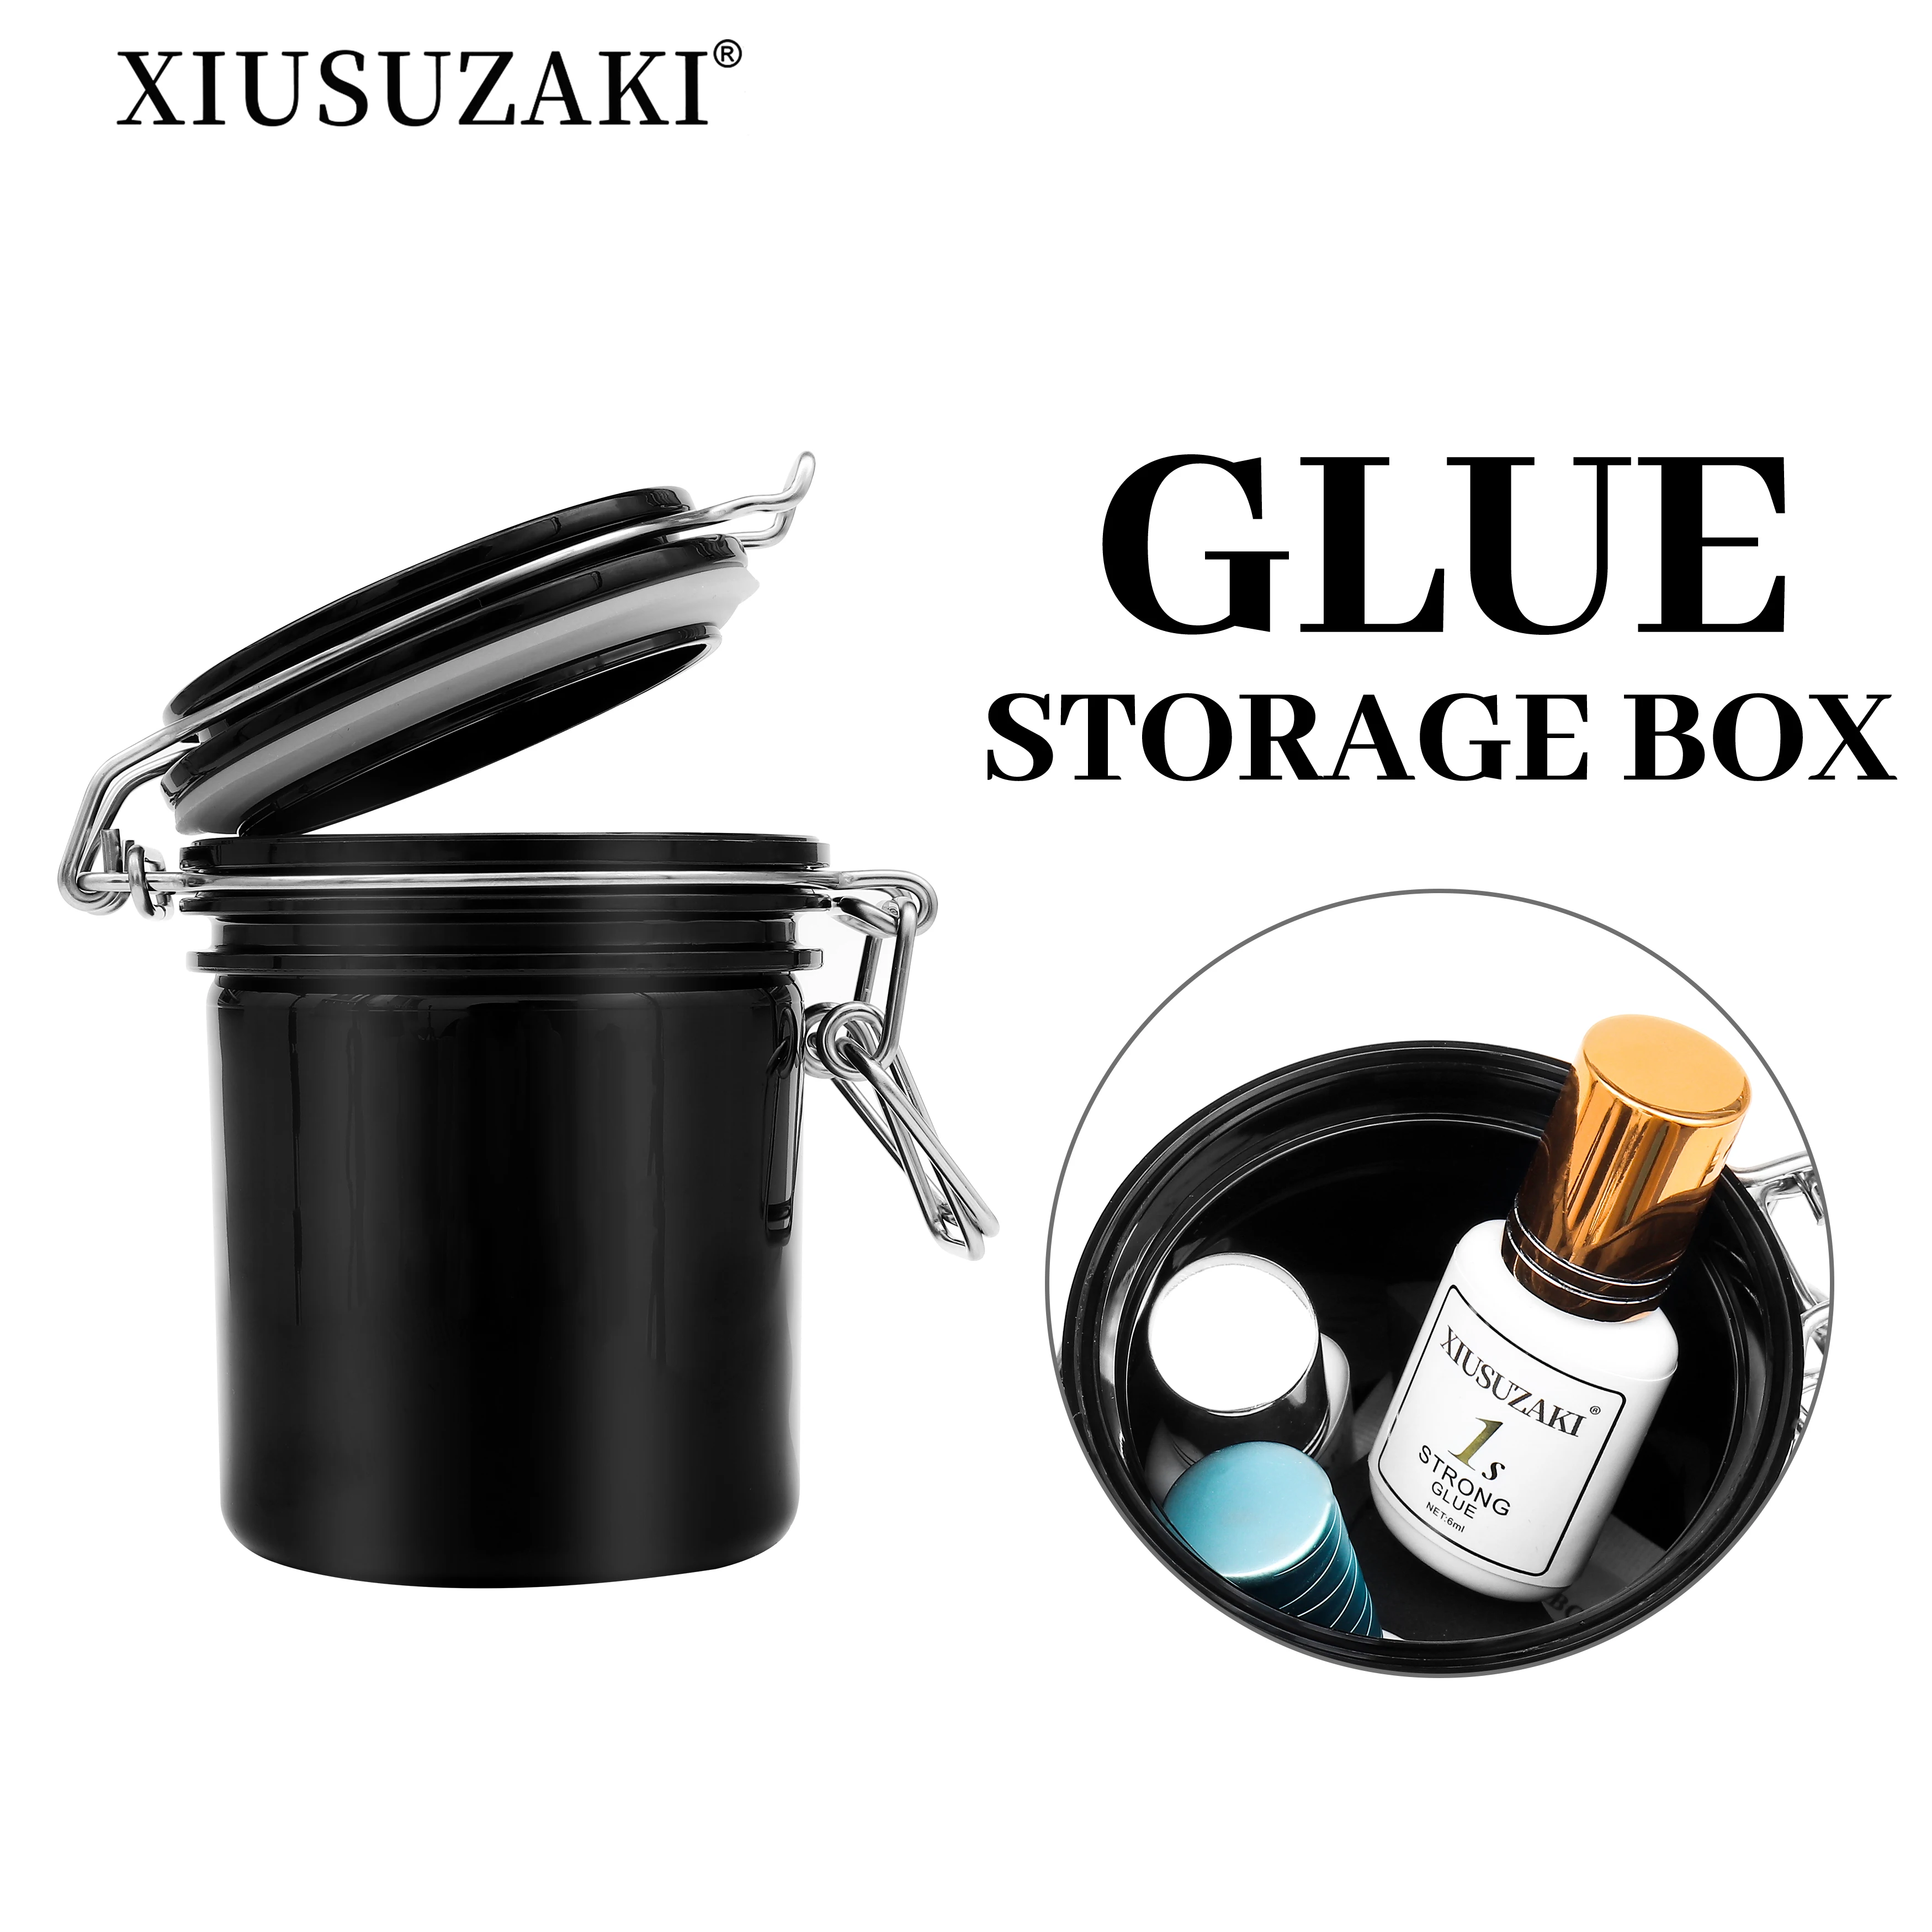 

XIUSUZAKI Lash Glue Storage Container Airtight Adhesive Holder for Eyelash Extension Glues Hold 3 Adhesives Sealed Jar Tank Box